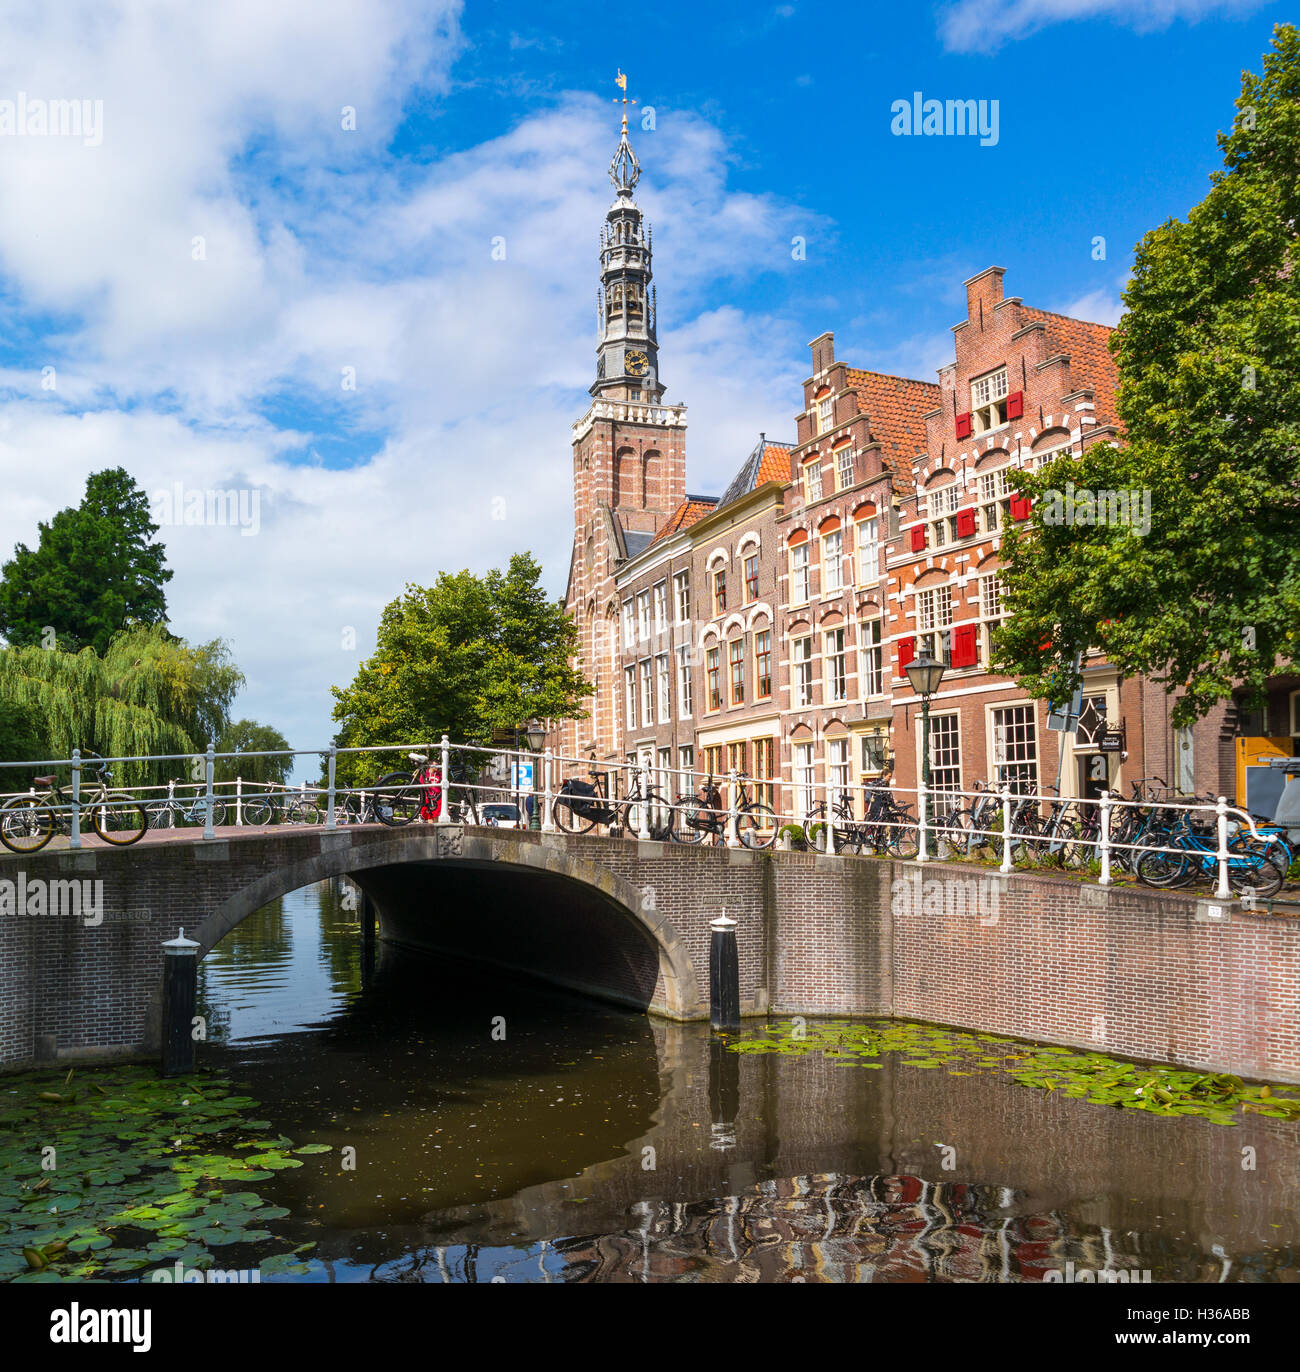 Groenebrug ponte sul canal Steenschuur, Luigi torre campanaria e gables di vecchie case nel centro di Leiden, Olanda meridionale, Netherl Foto Stock